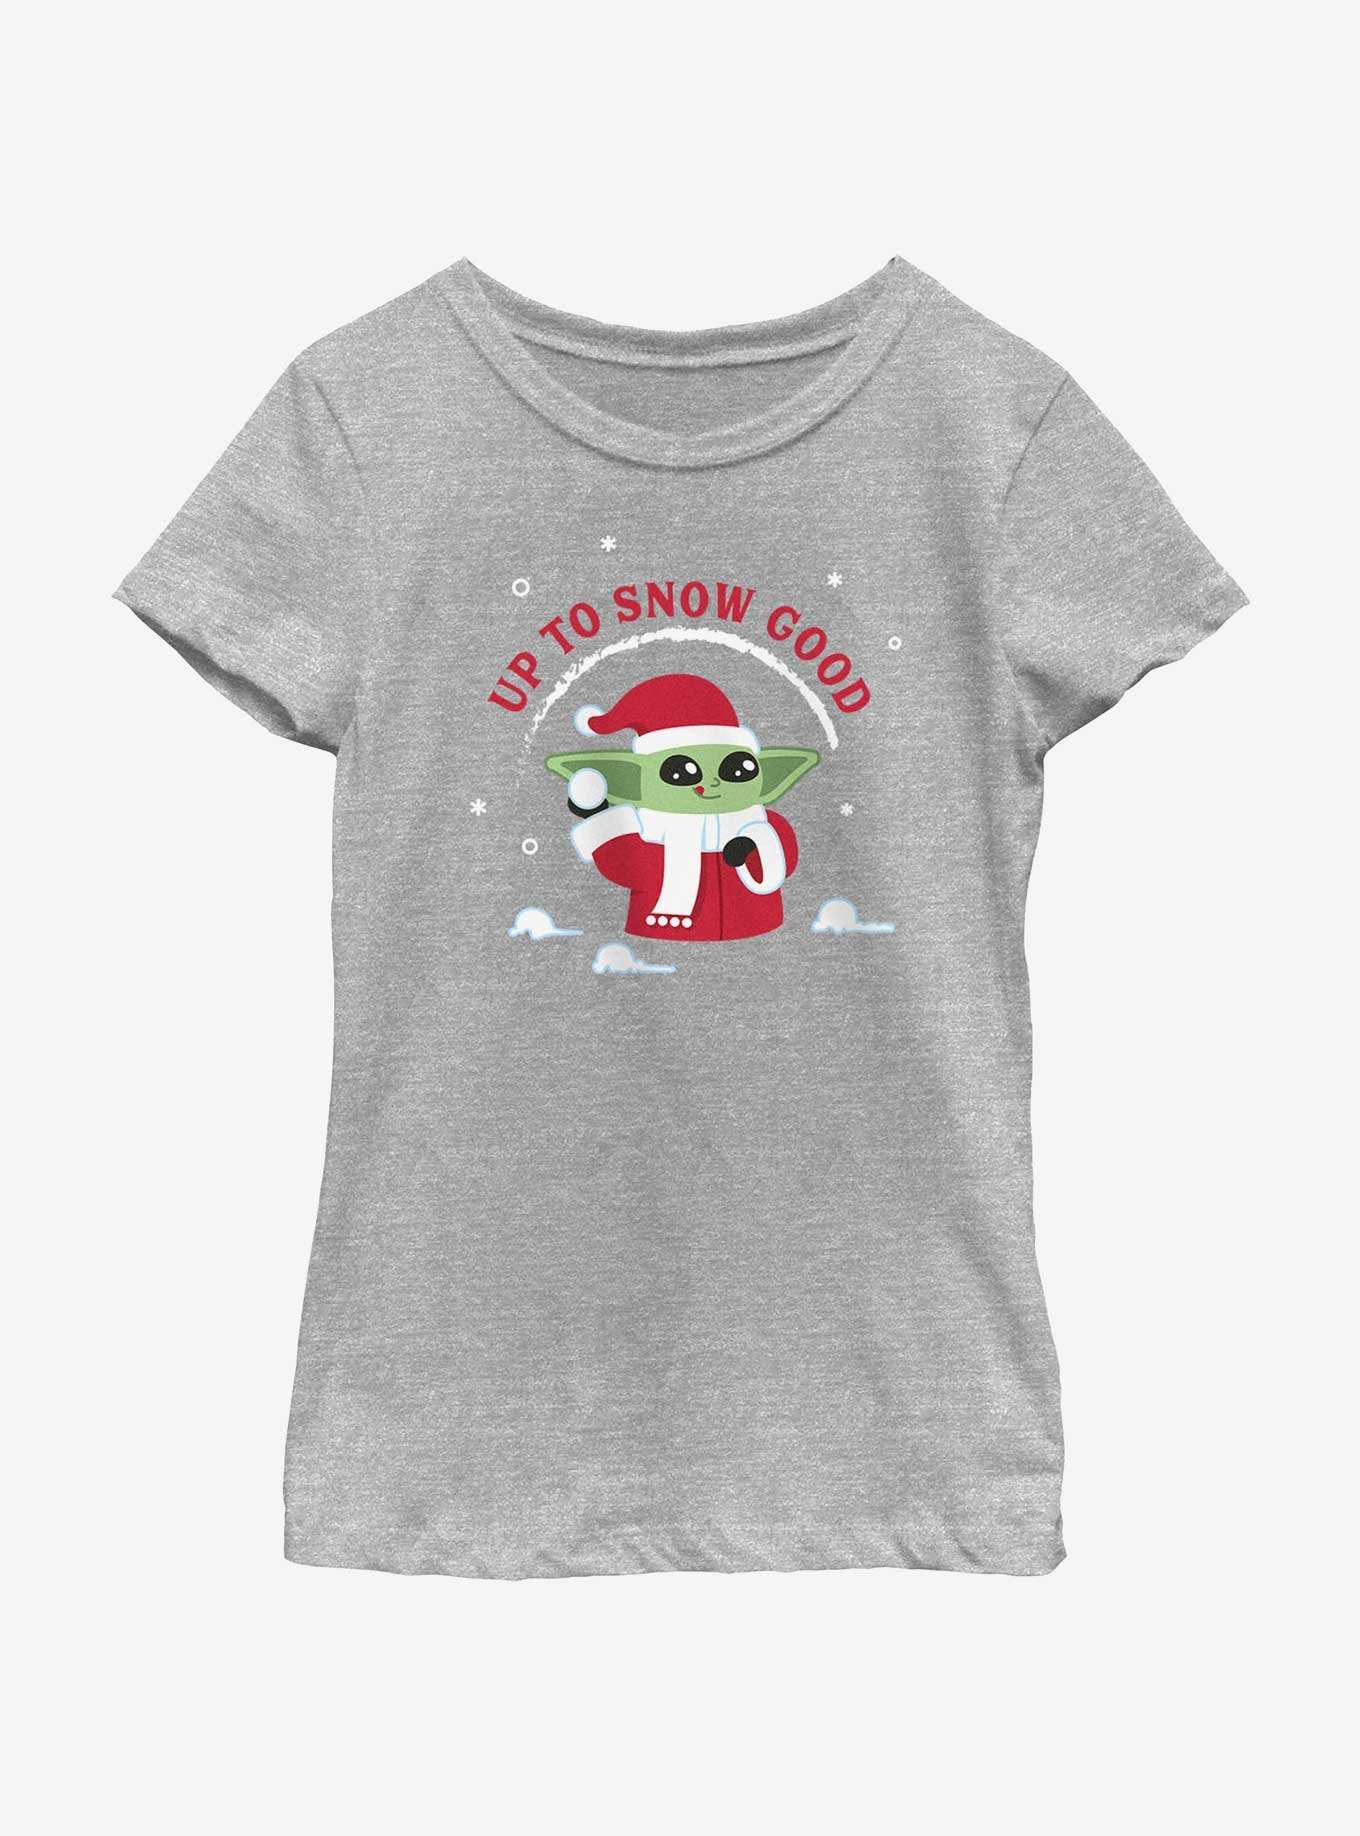 Star Wars The Mandalorian Santa Grogu Up To Snow Good Youth Girls T-Shirt, , hi-res